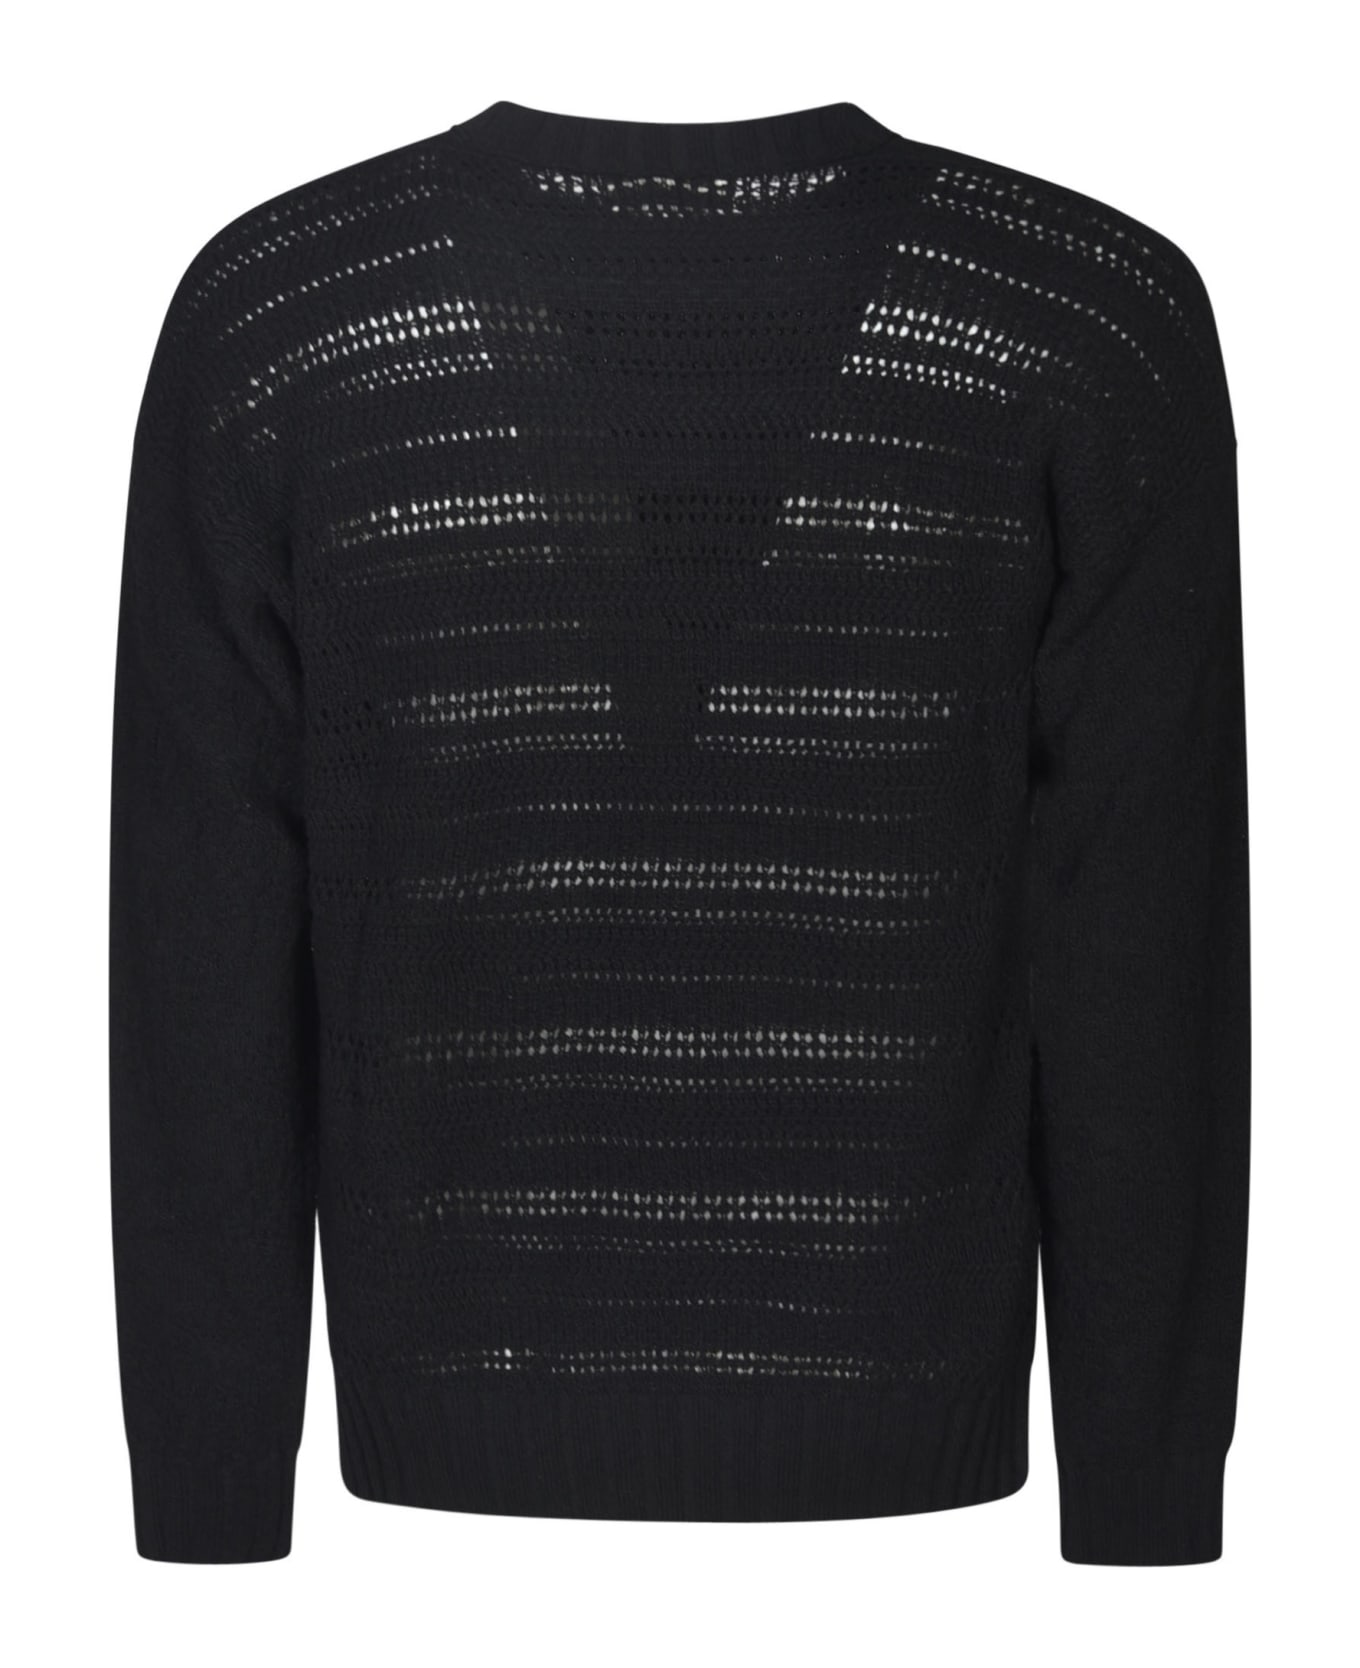 Atomo Factory Knitted Sweatshirt - Black